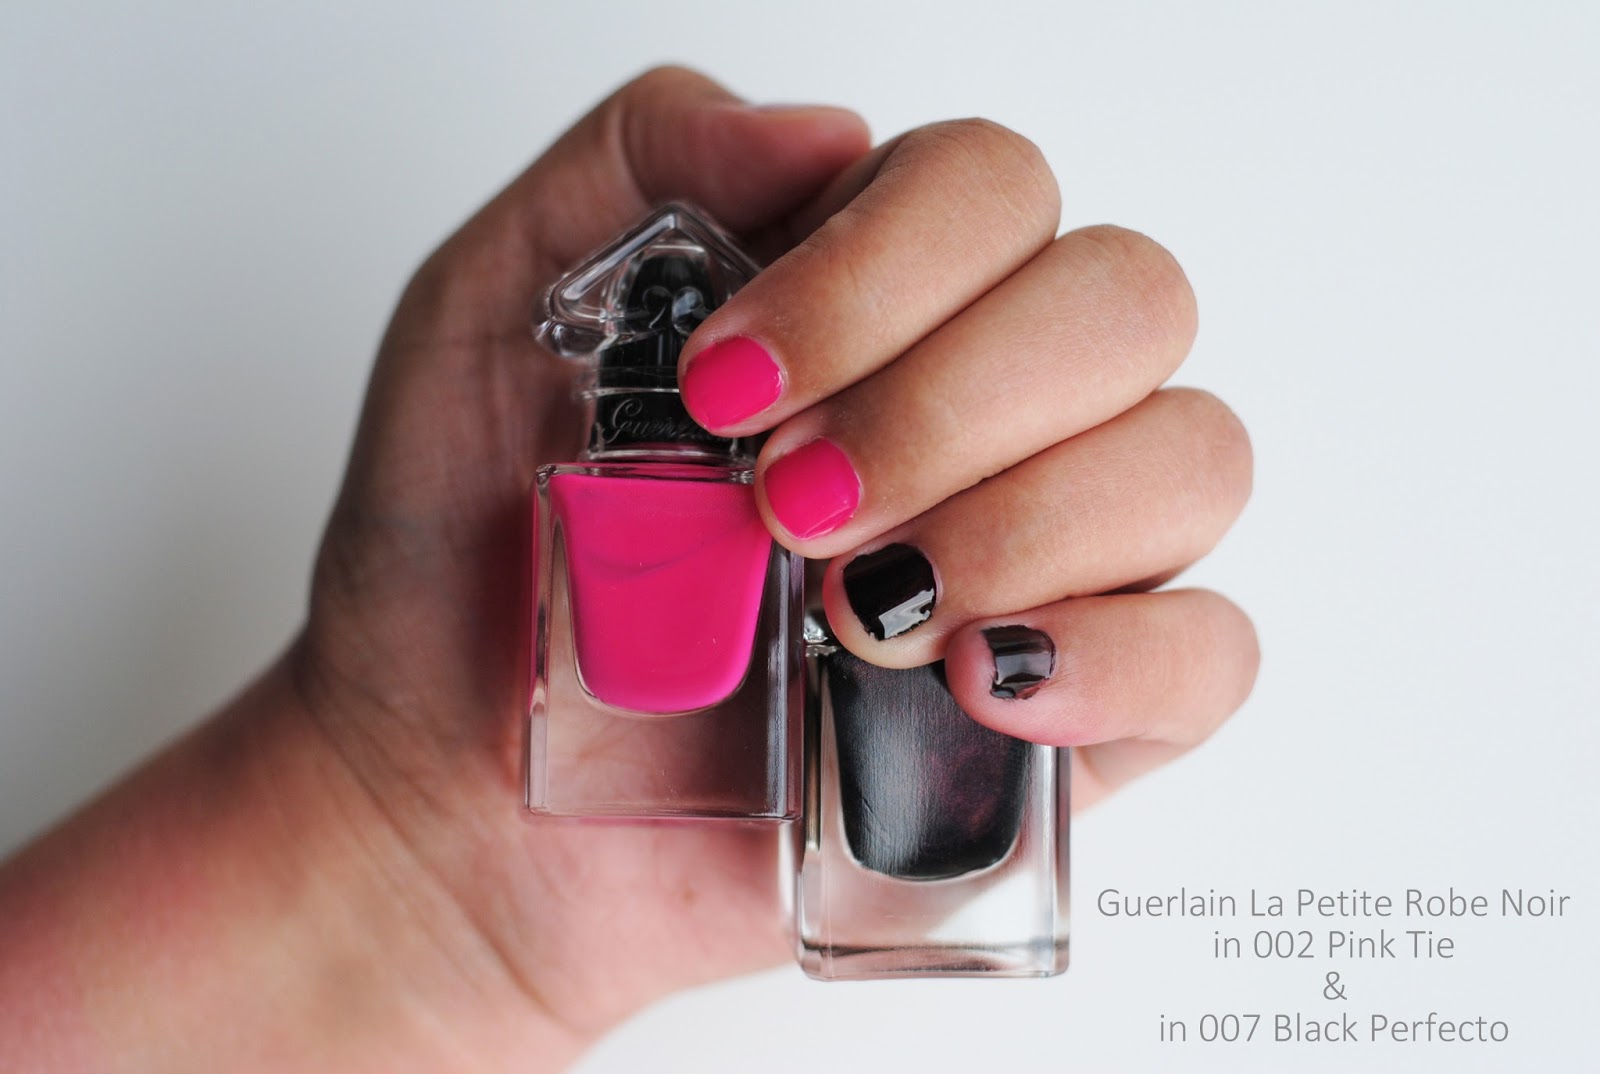 la petite robe noire guerlain lipstick nail polish swatches